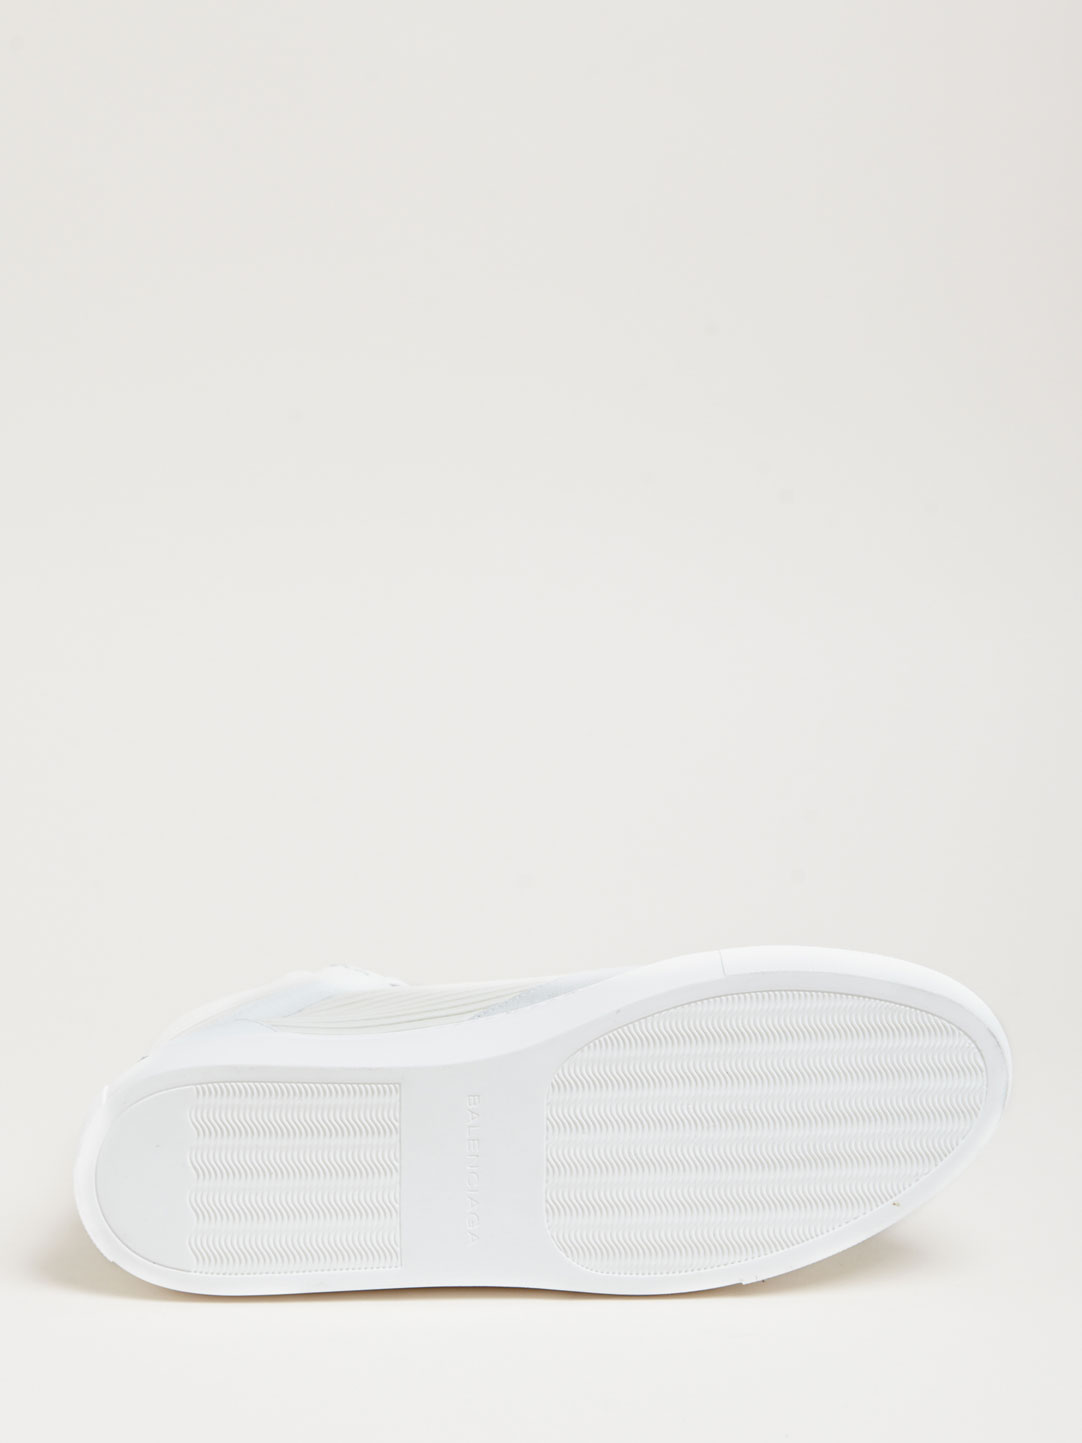 Balenciaga Hi-Top White Sneakers | SOLETOPIA